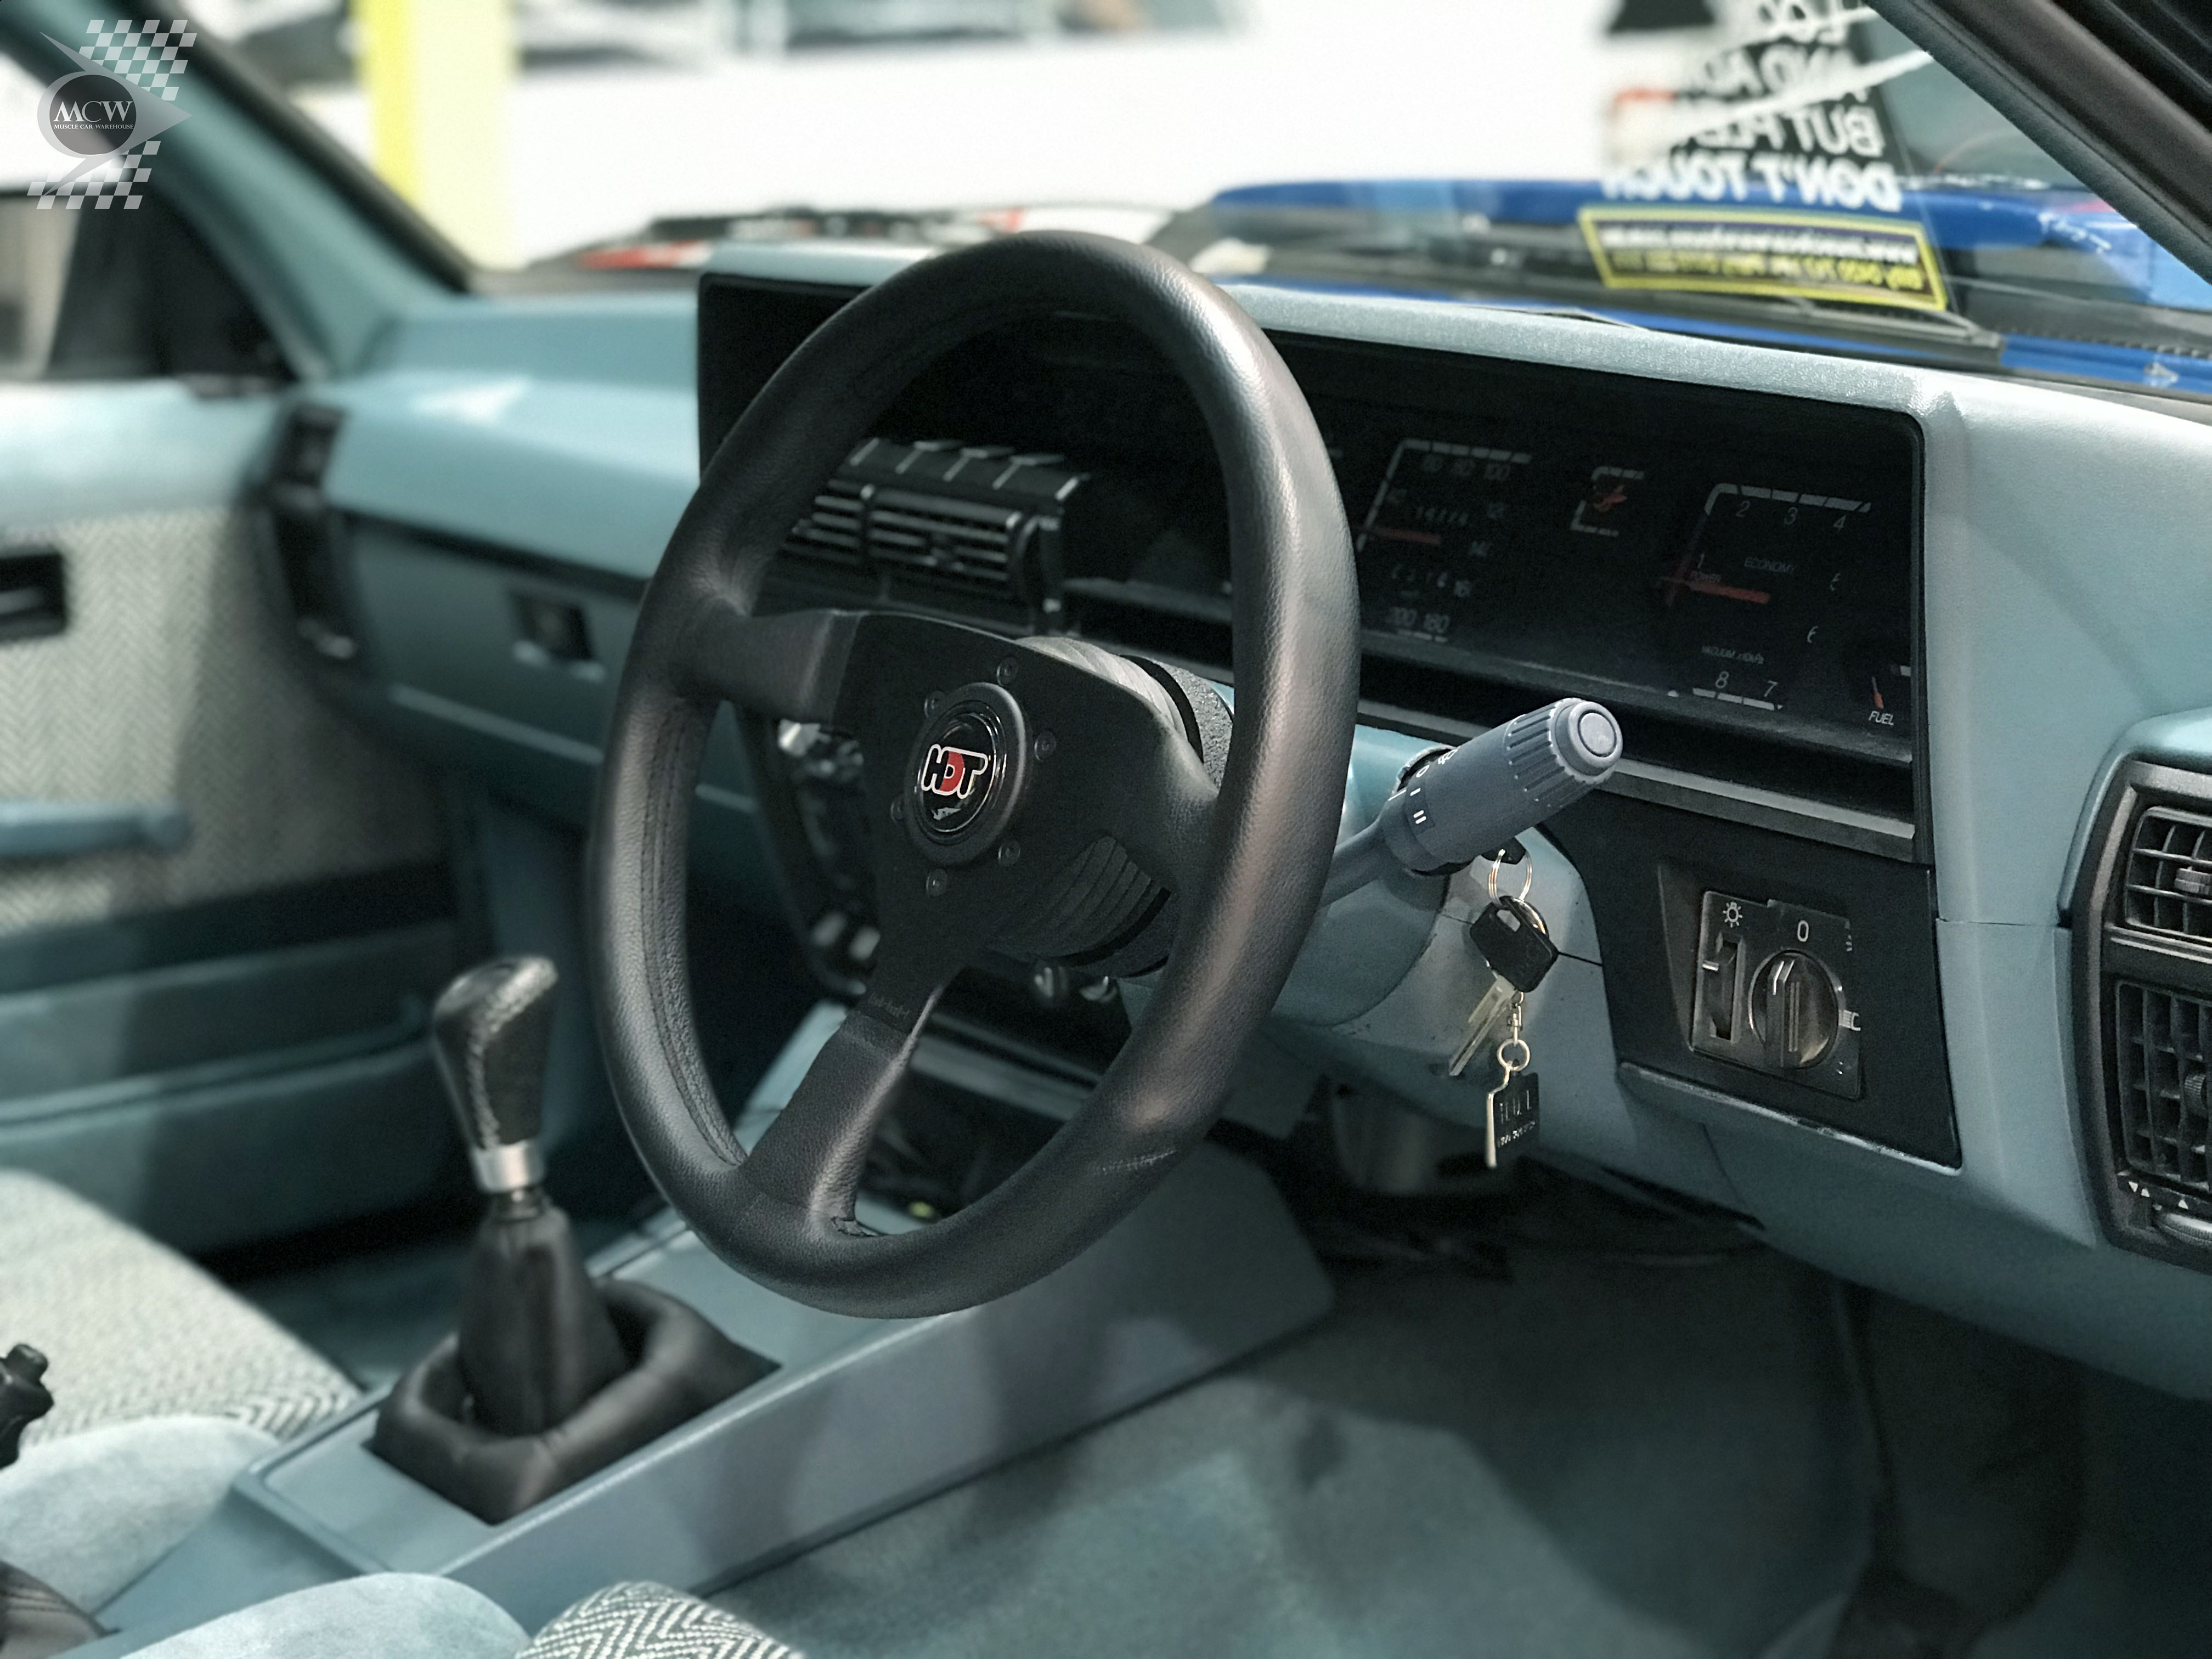 Holden VK SS Group A Replica Interior | Muscle Car Warehouse